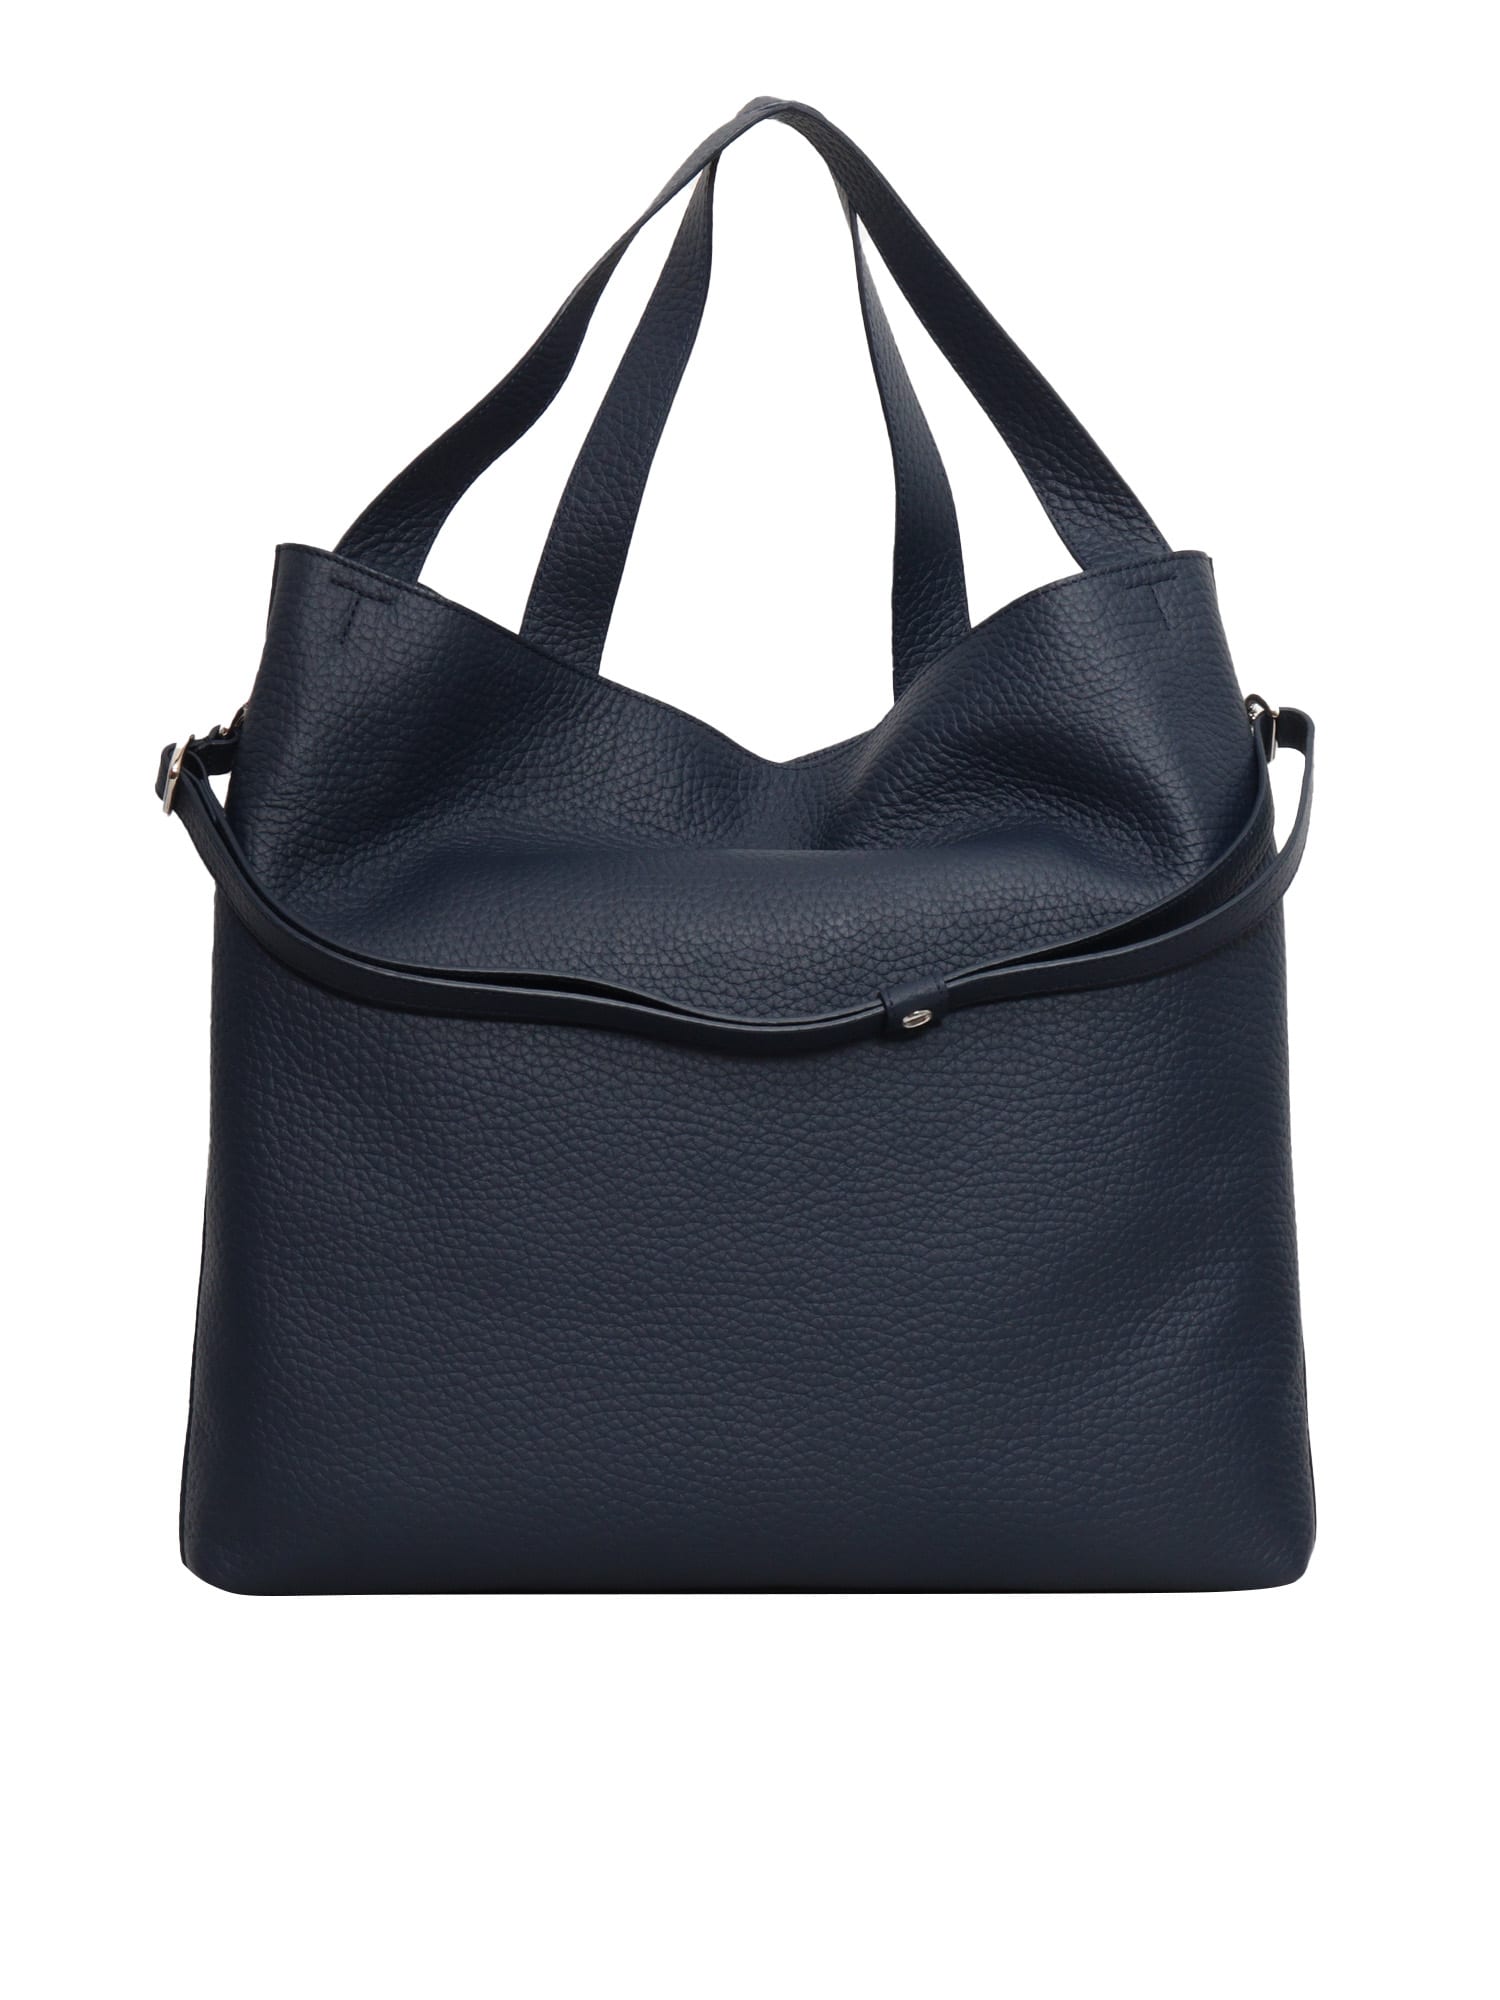 Shop Orciani Blue Handbag